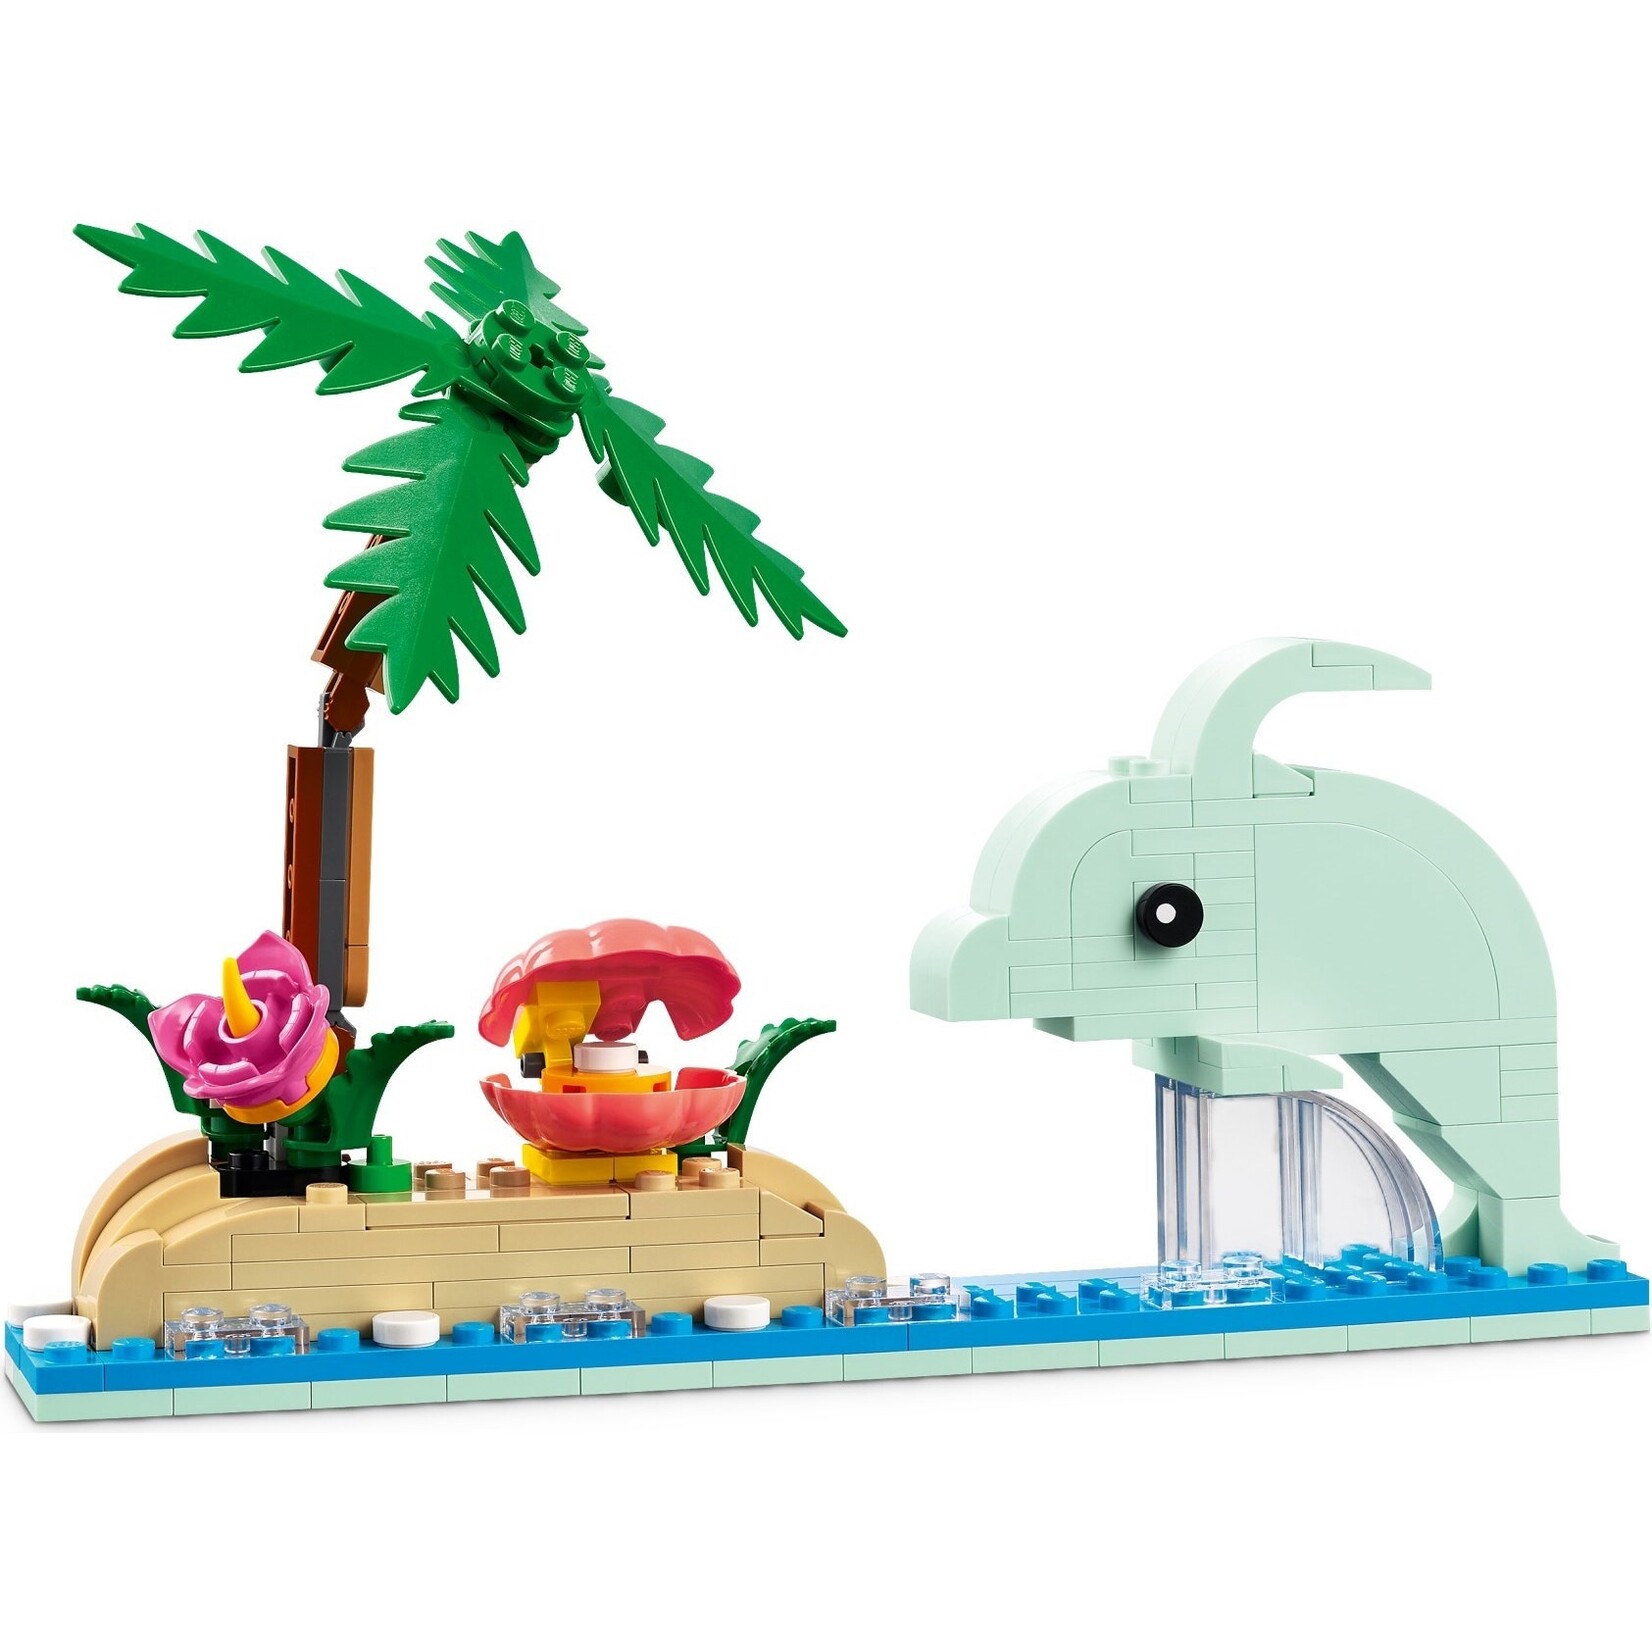 LEGO Tropisce ukelele - 31156